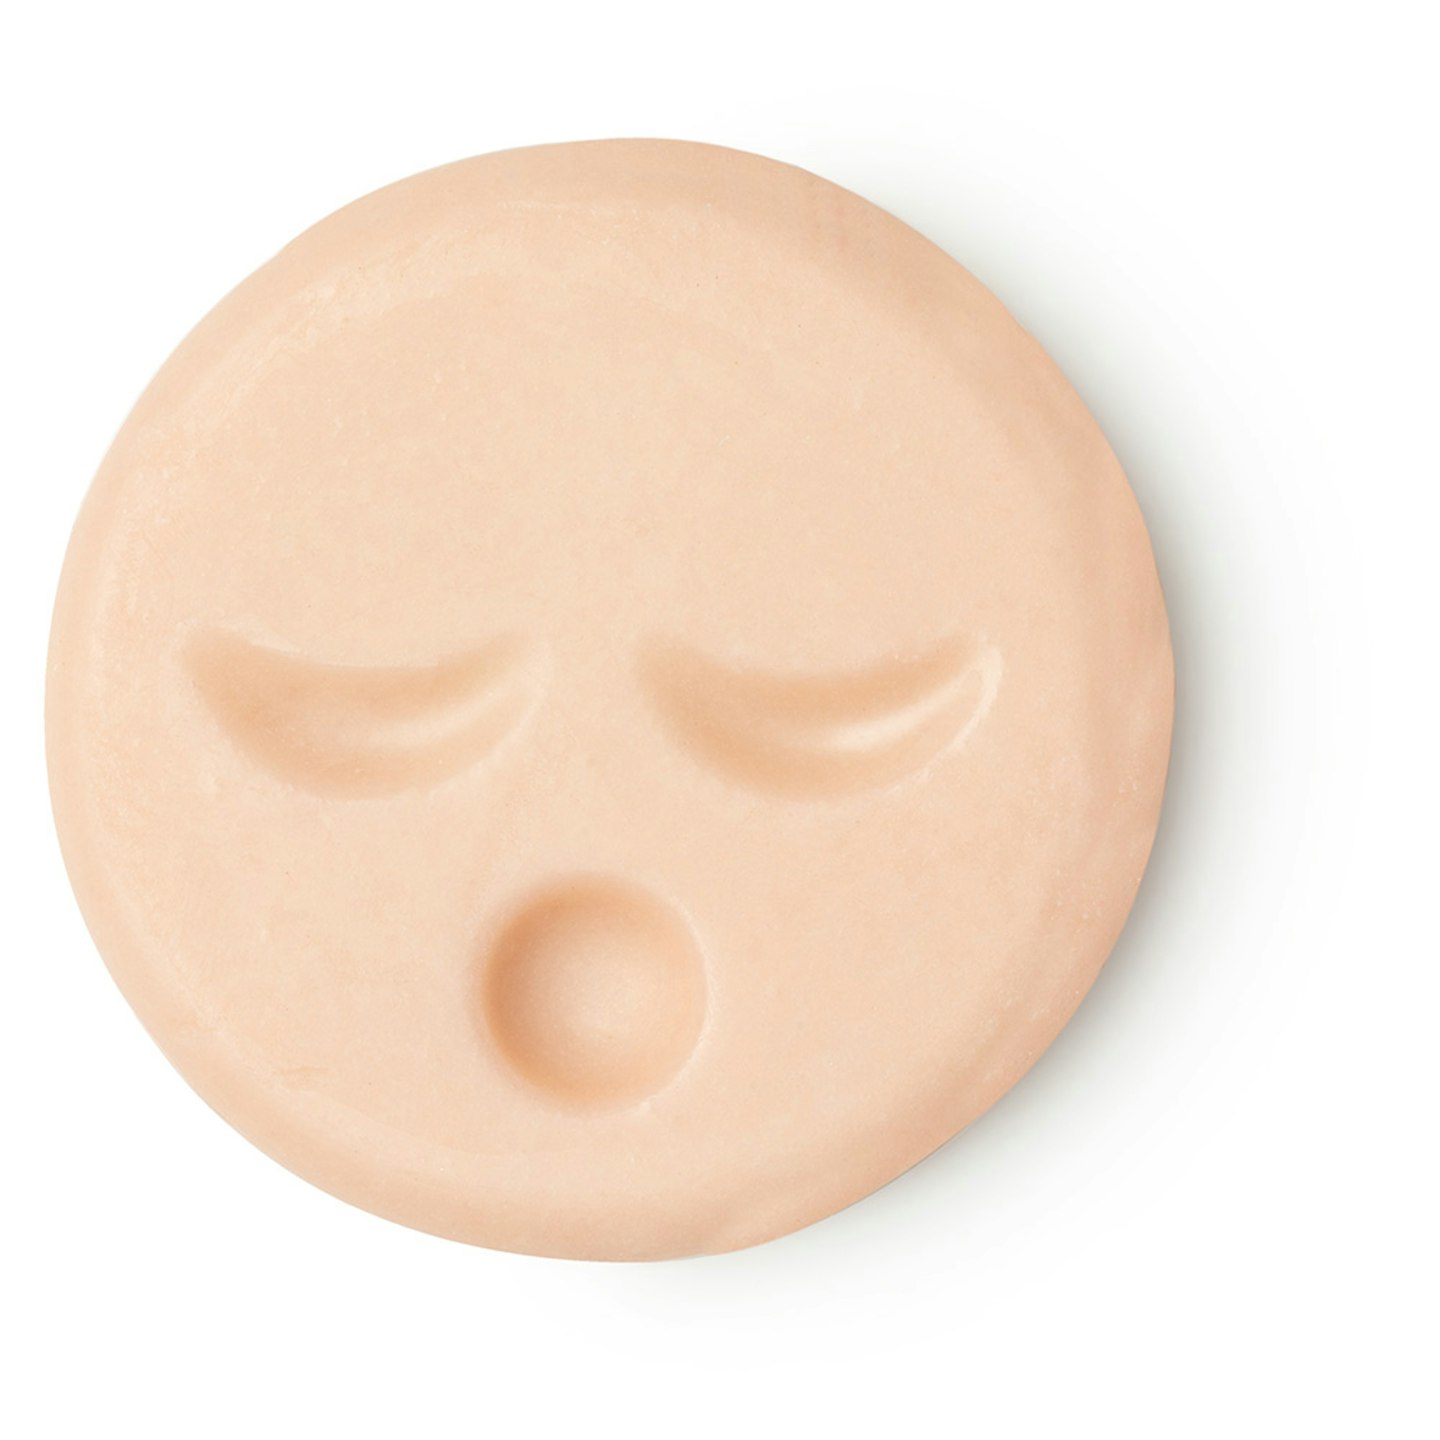 Lushu2019s Sleepy Face Naked Cleansing Balm, £4.95